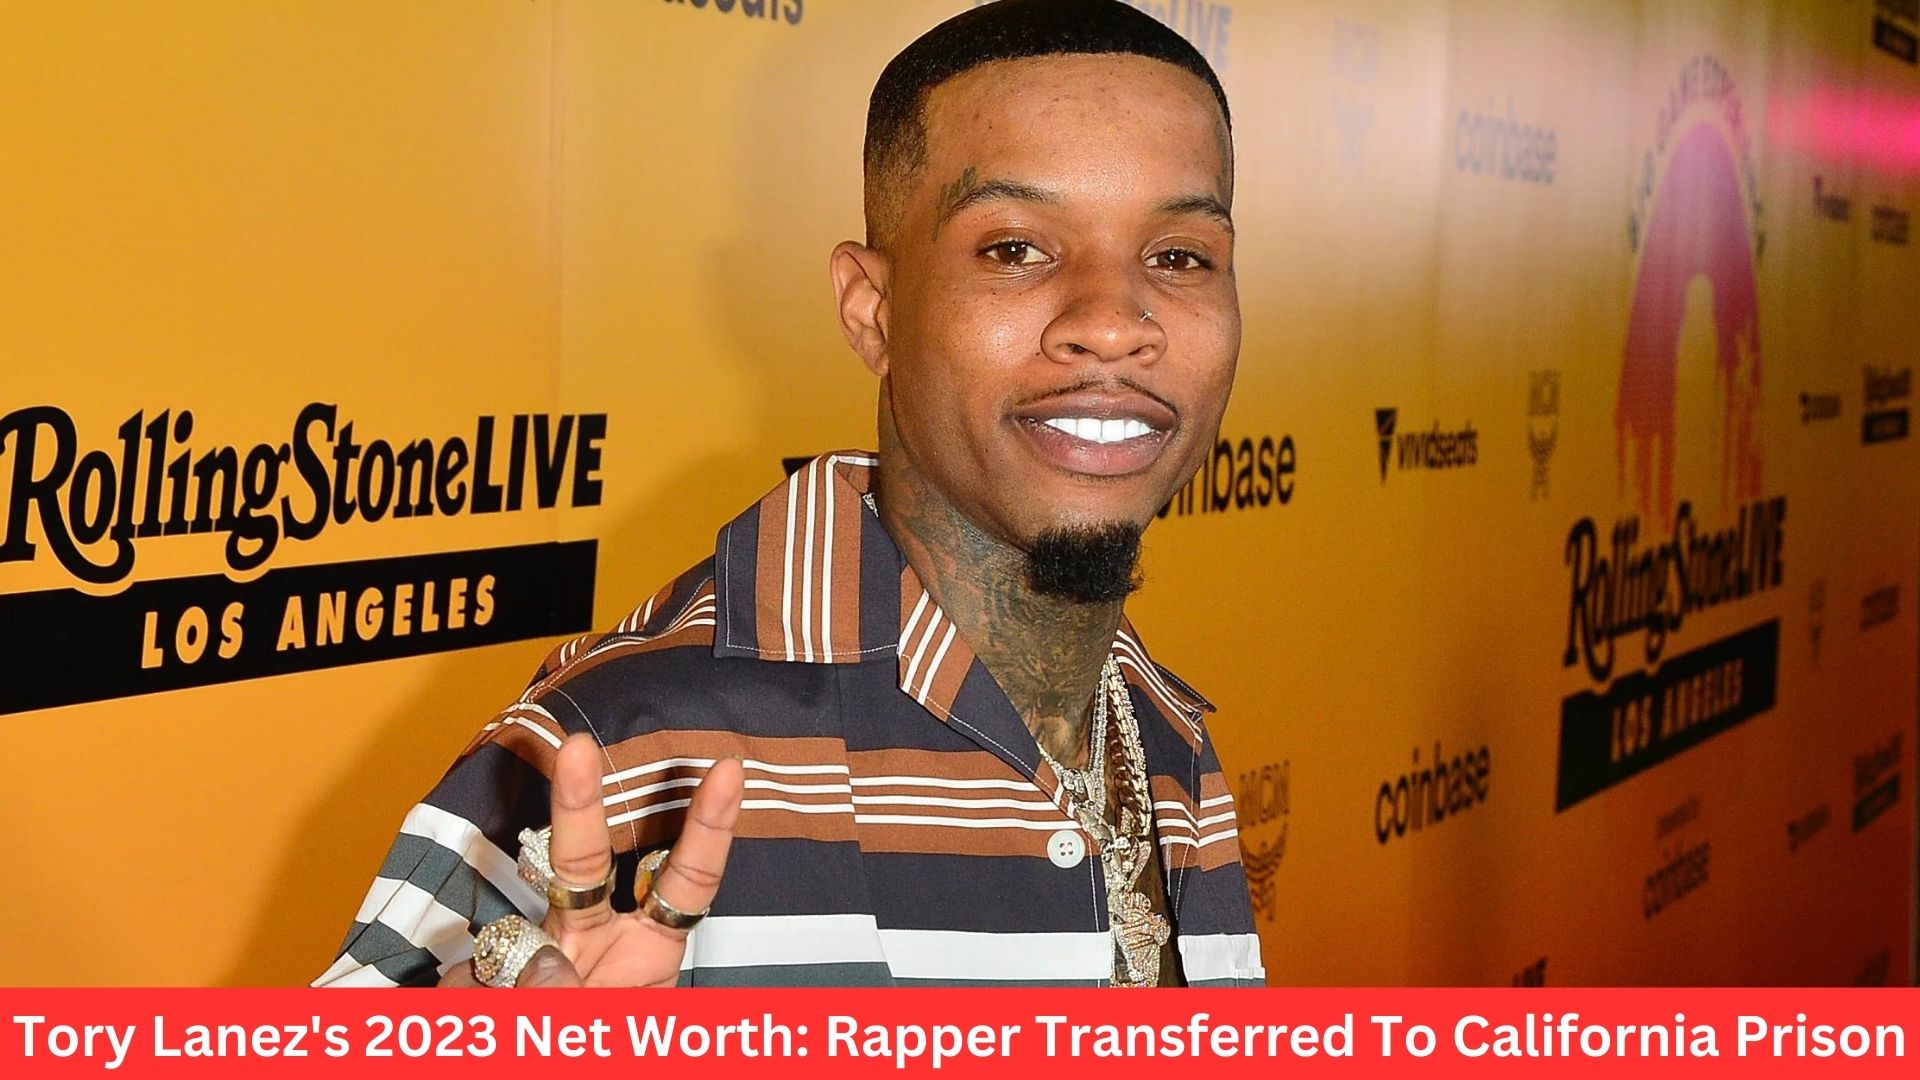 Tory Lanez's 2023 Net Worth: Rapper Transferred To California Prison